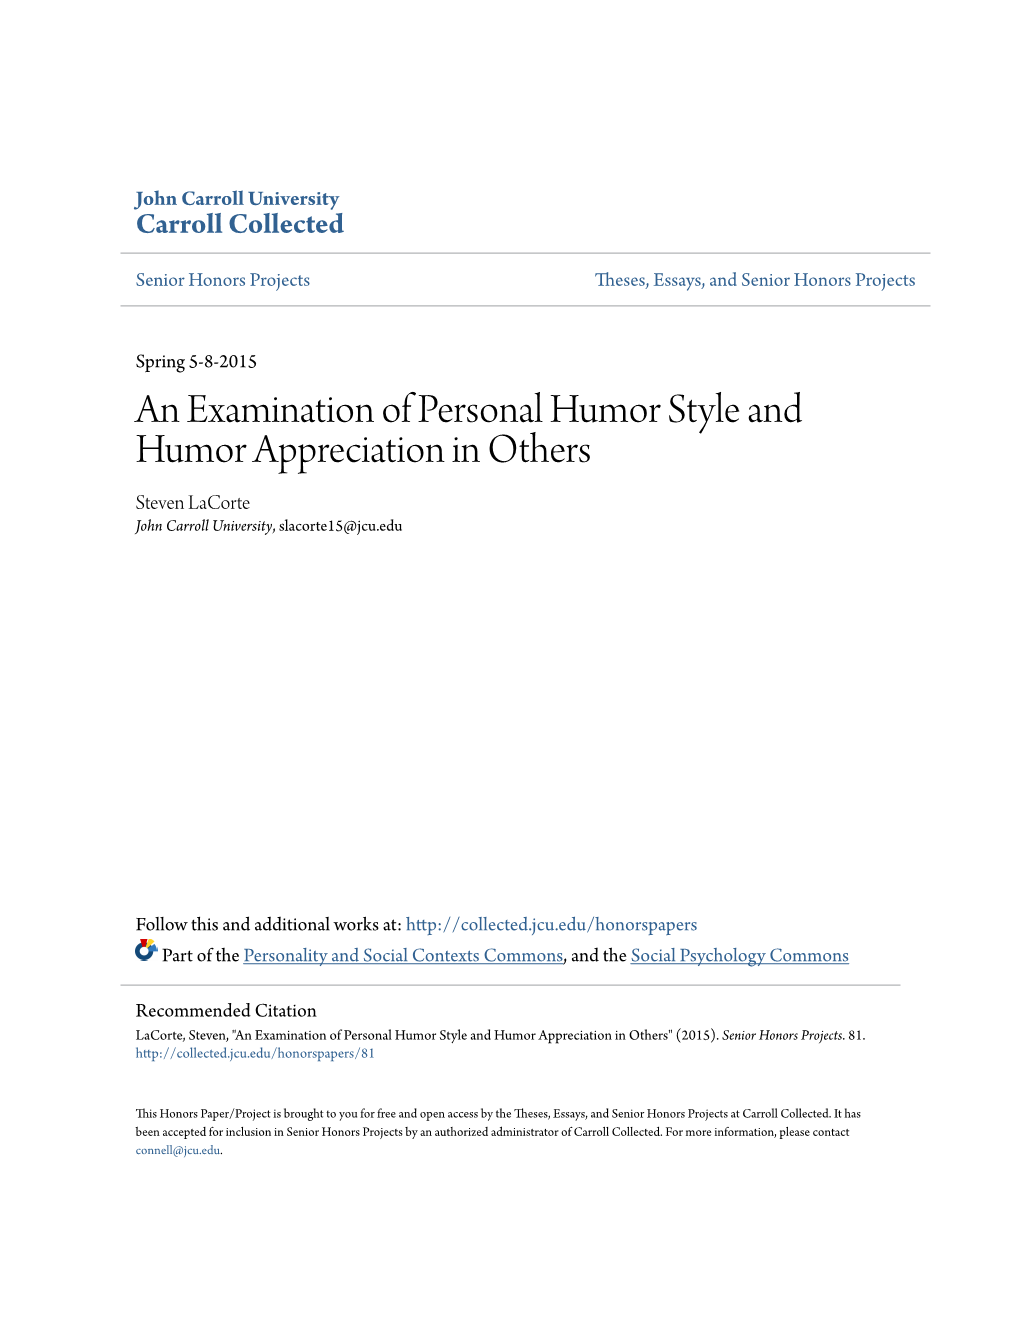 An Examination of Personal Humor Style and Humor Appreciation in Others Steven Lacorte John Carroll University, Slacorte15@Jcu.Edu